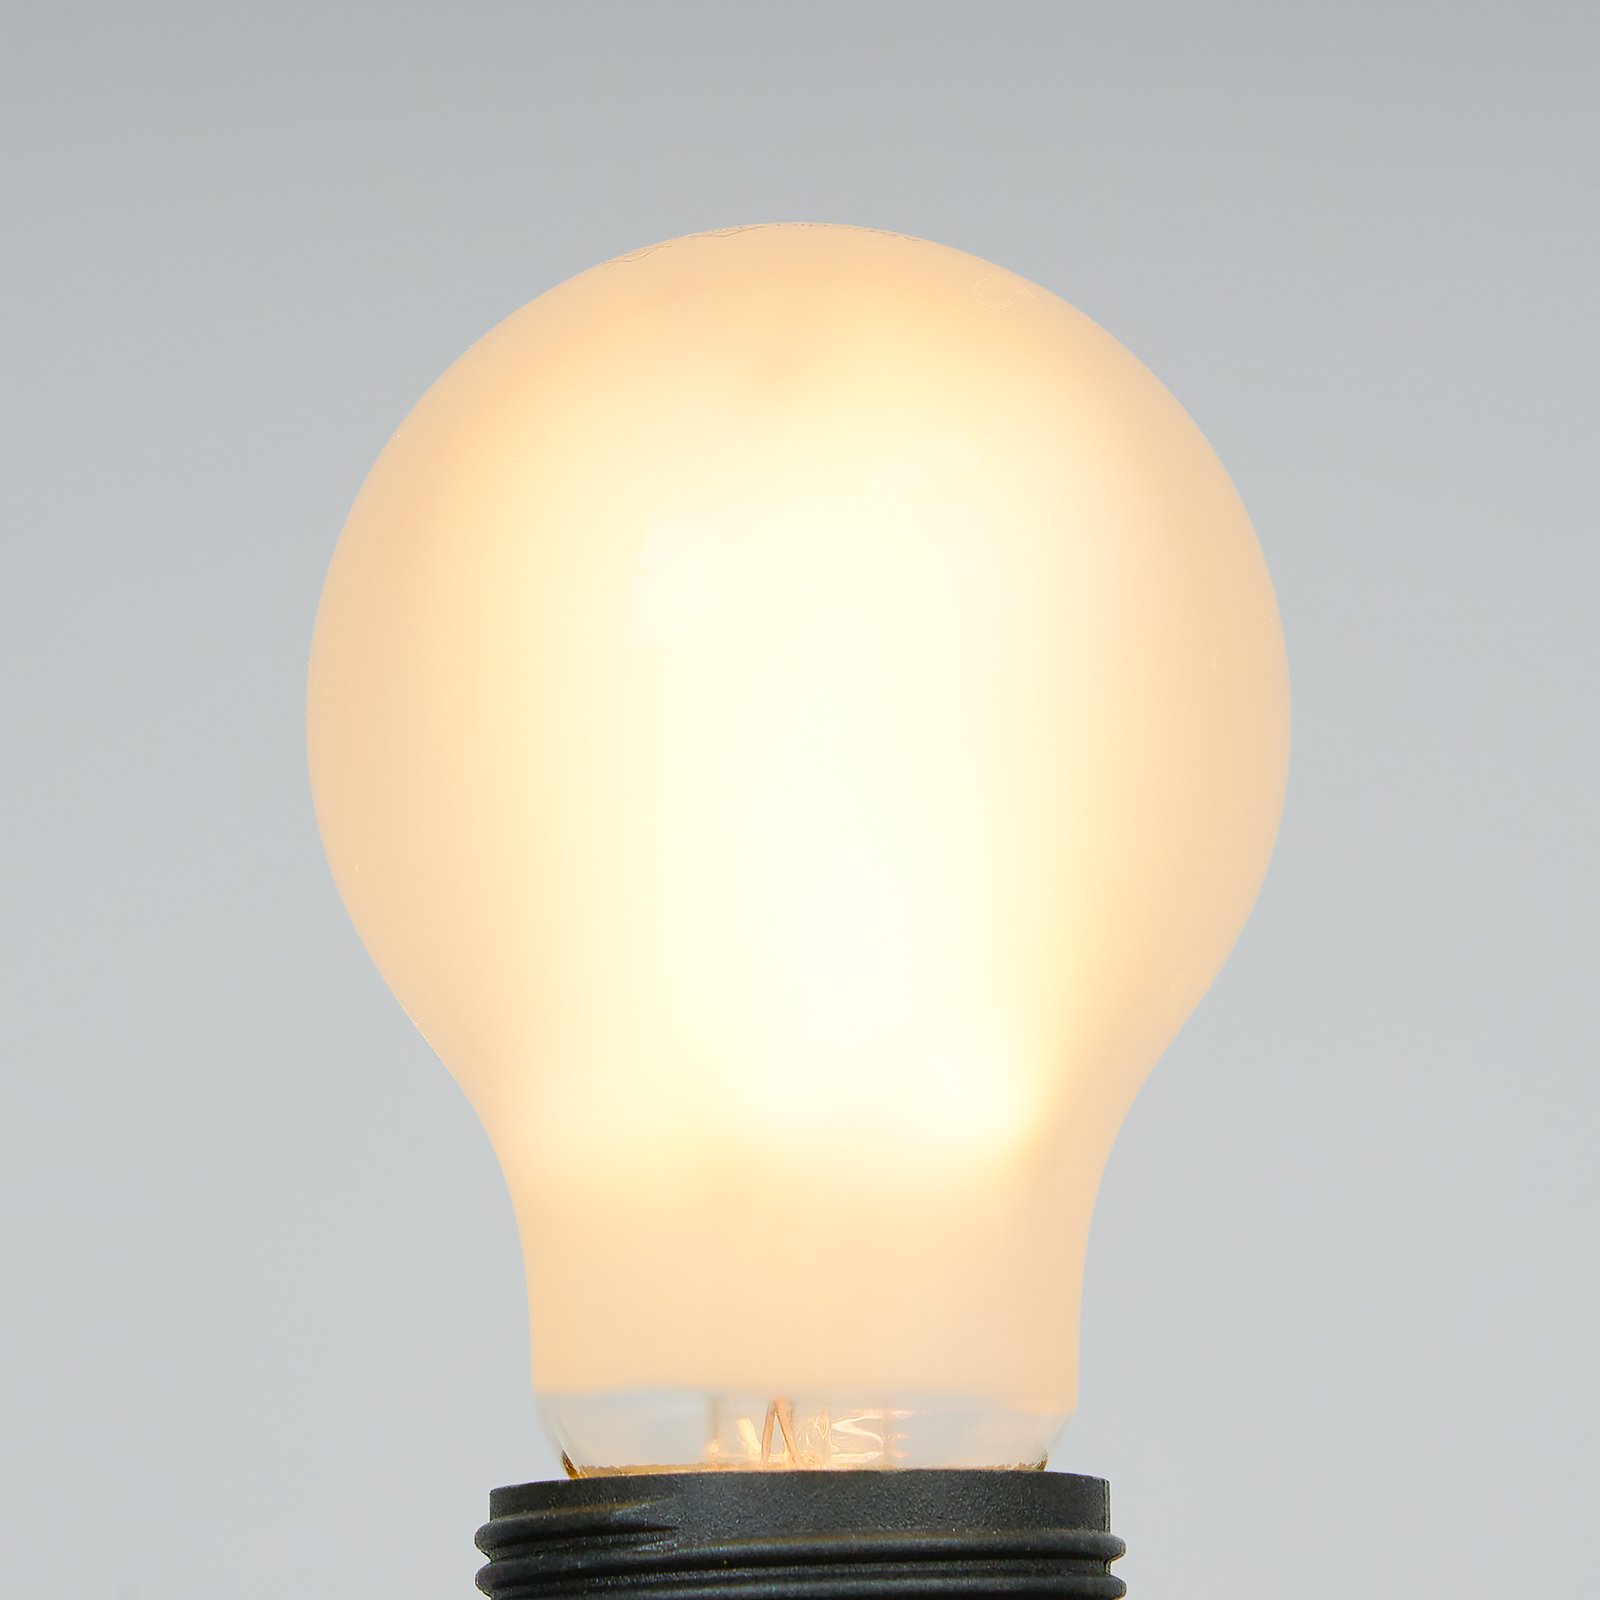 Arcchio LED lamp E27 3,8W A60 opaal 2700K 806 lm